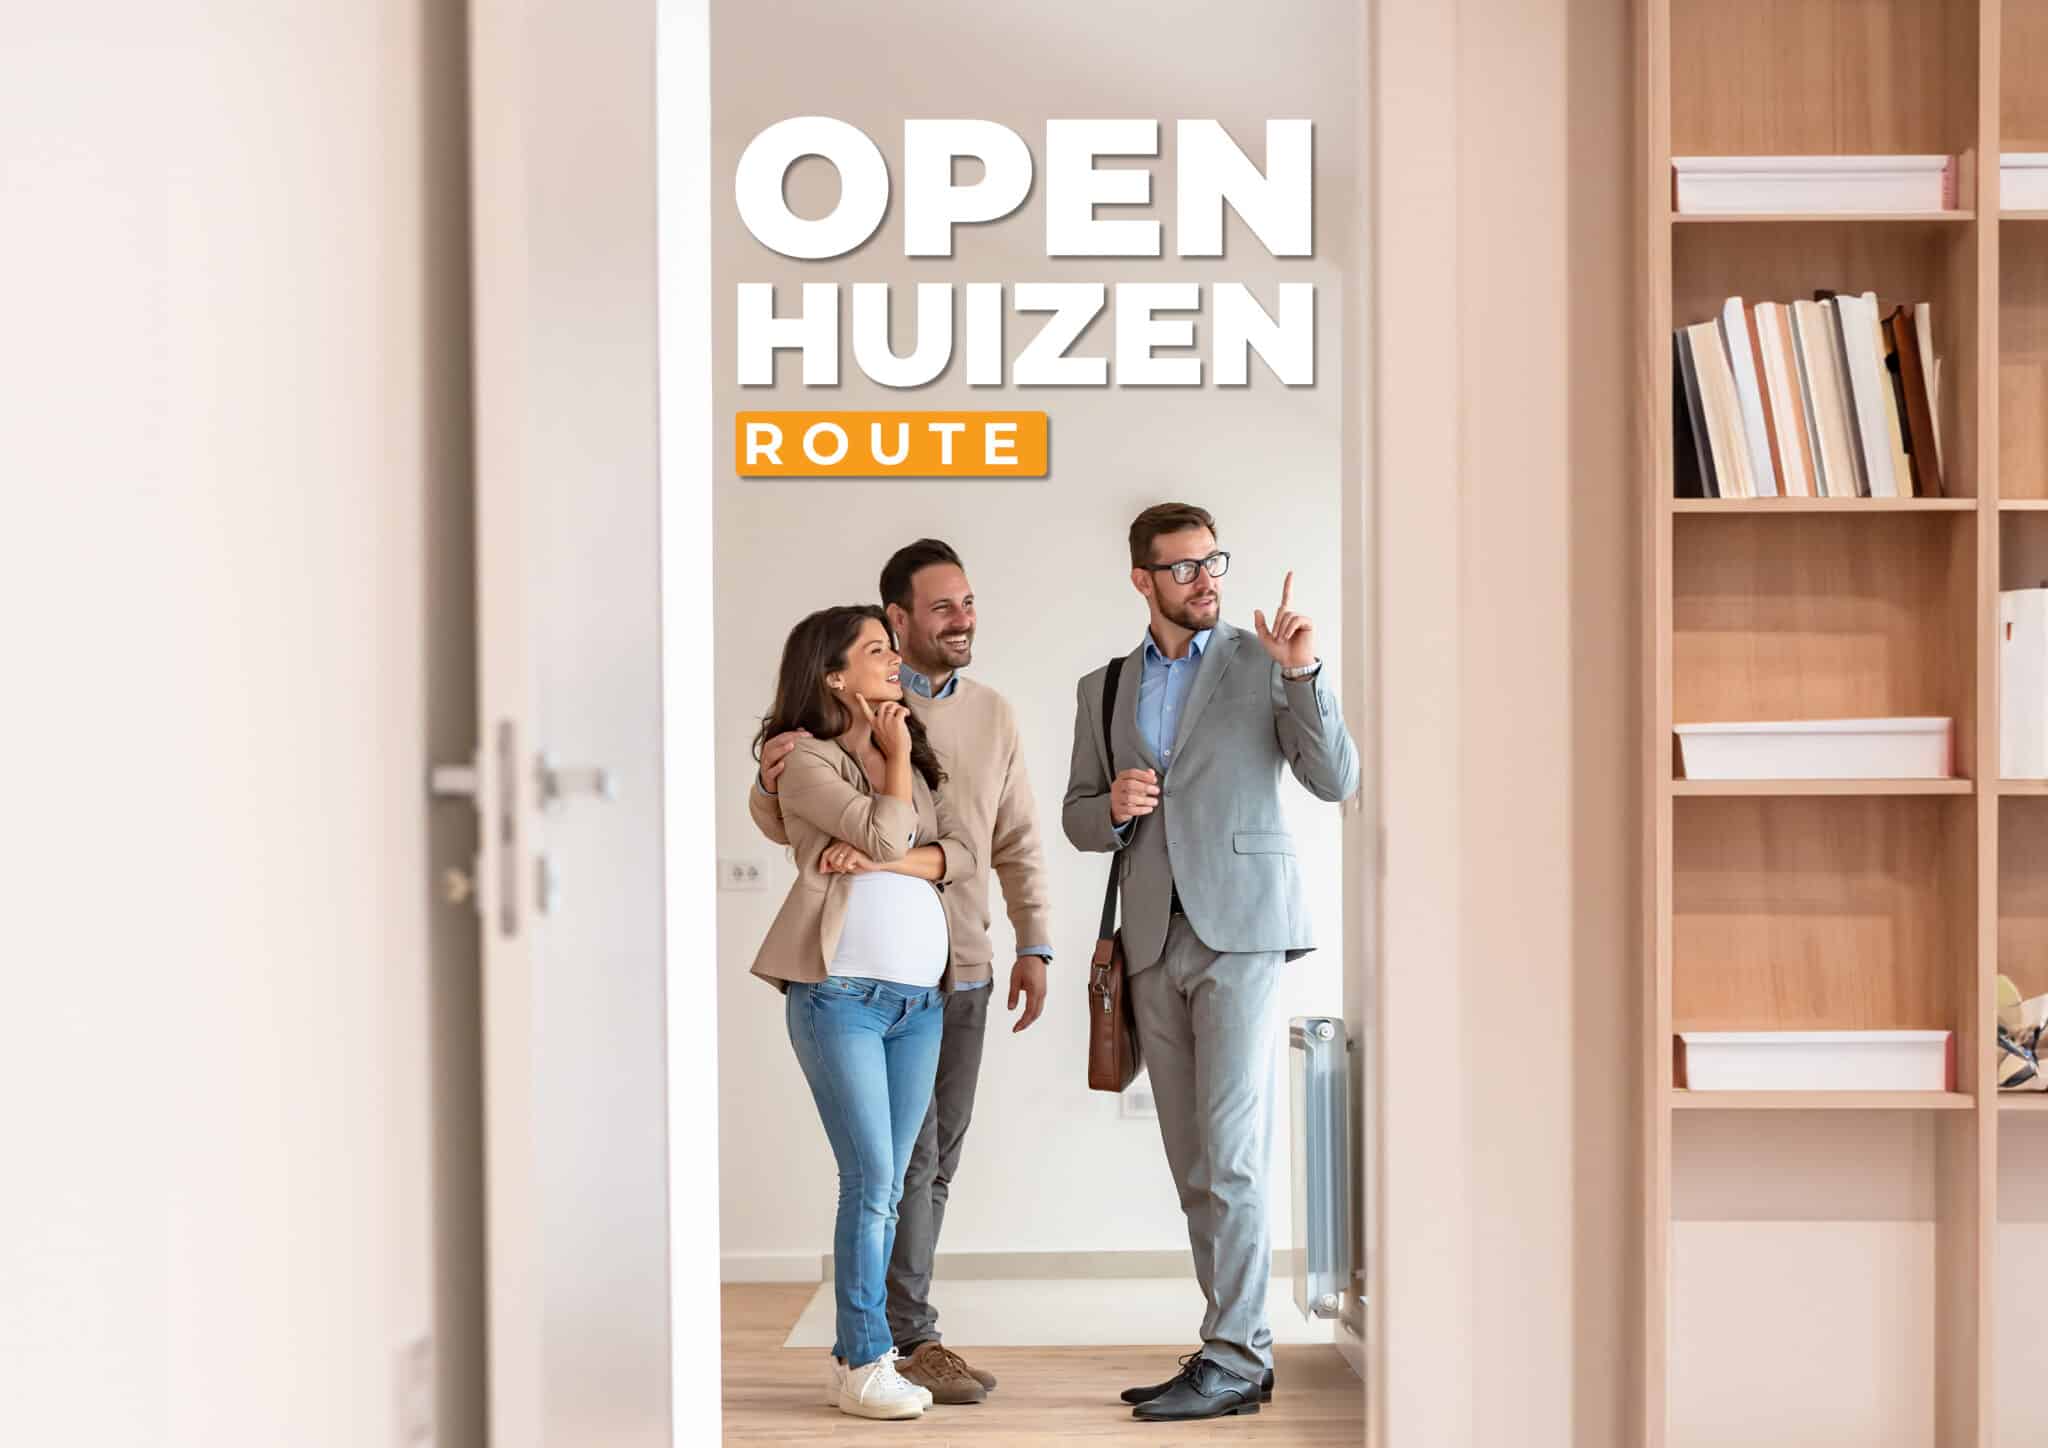 Open Huizen Route